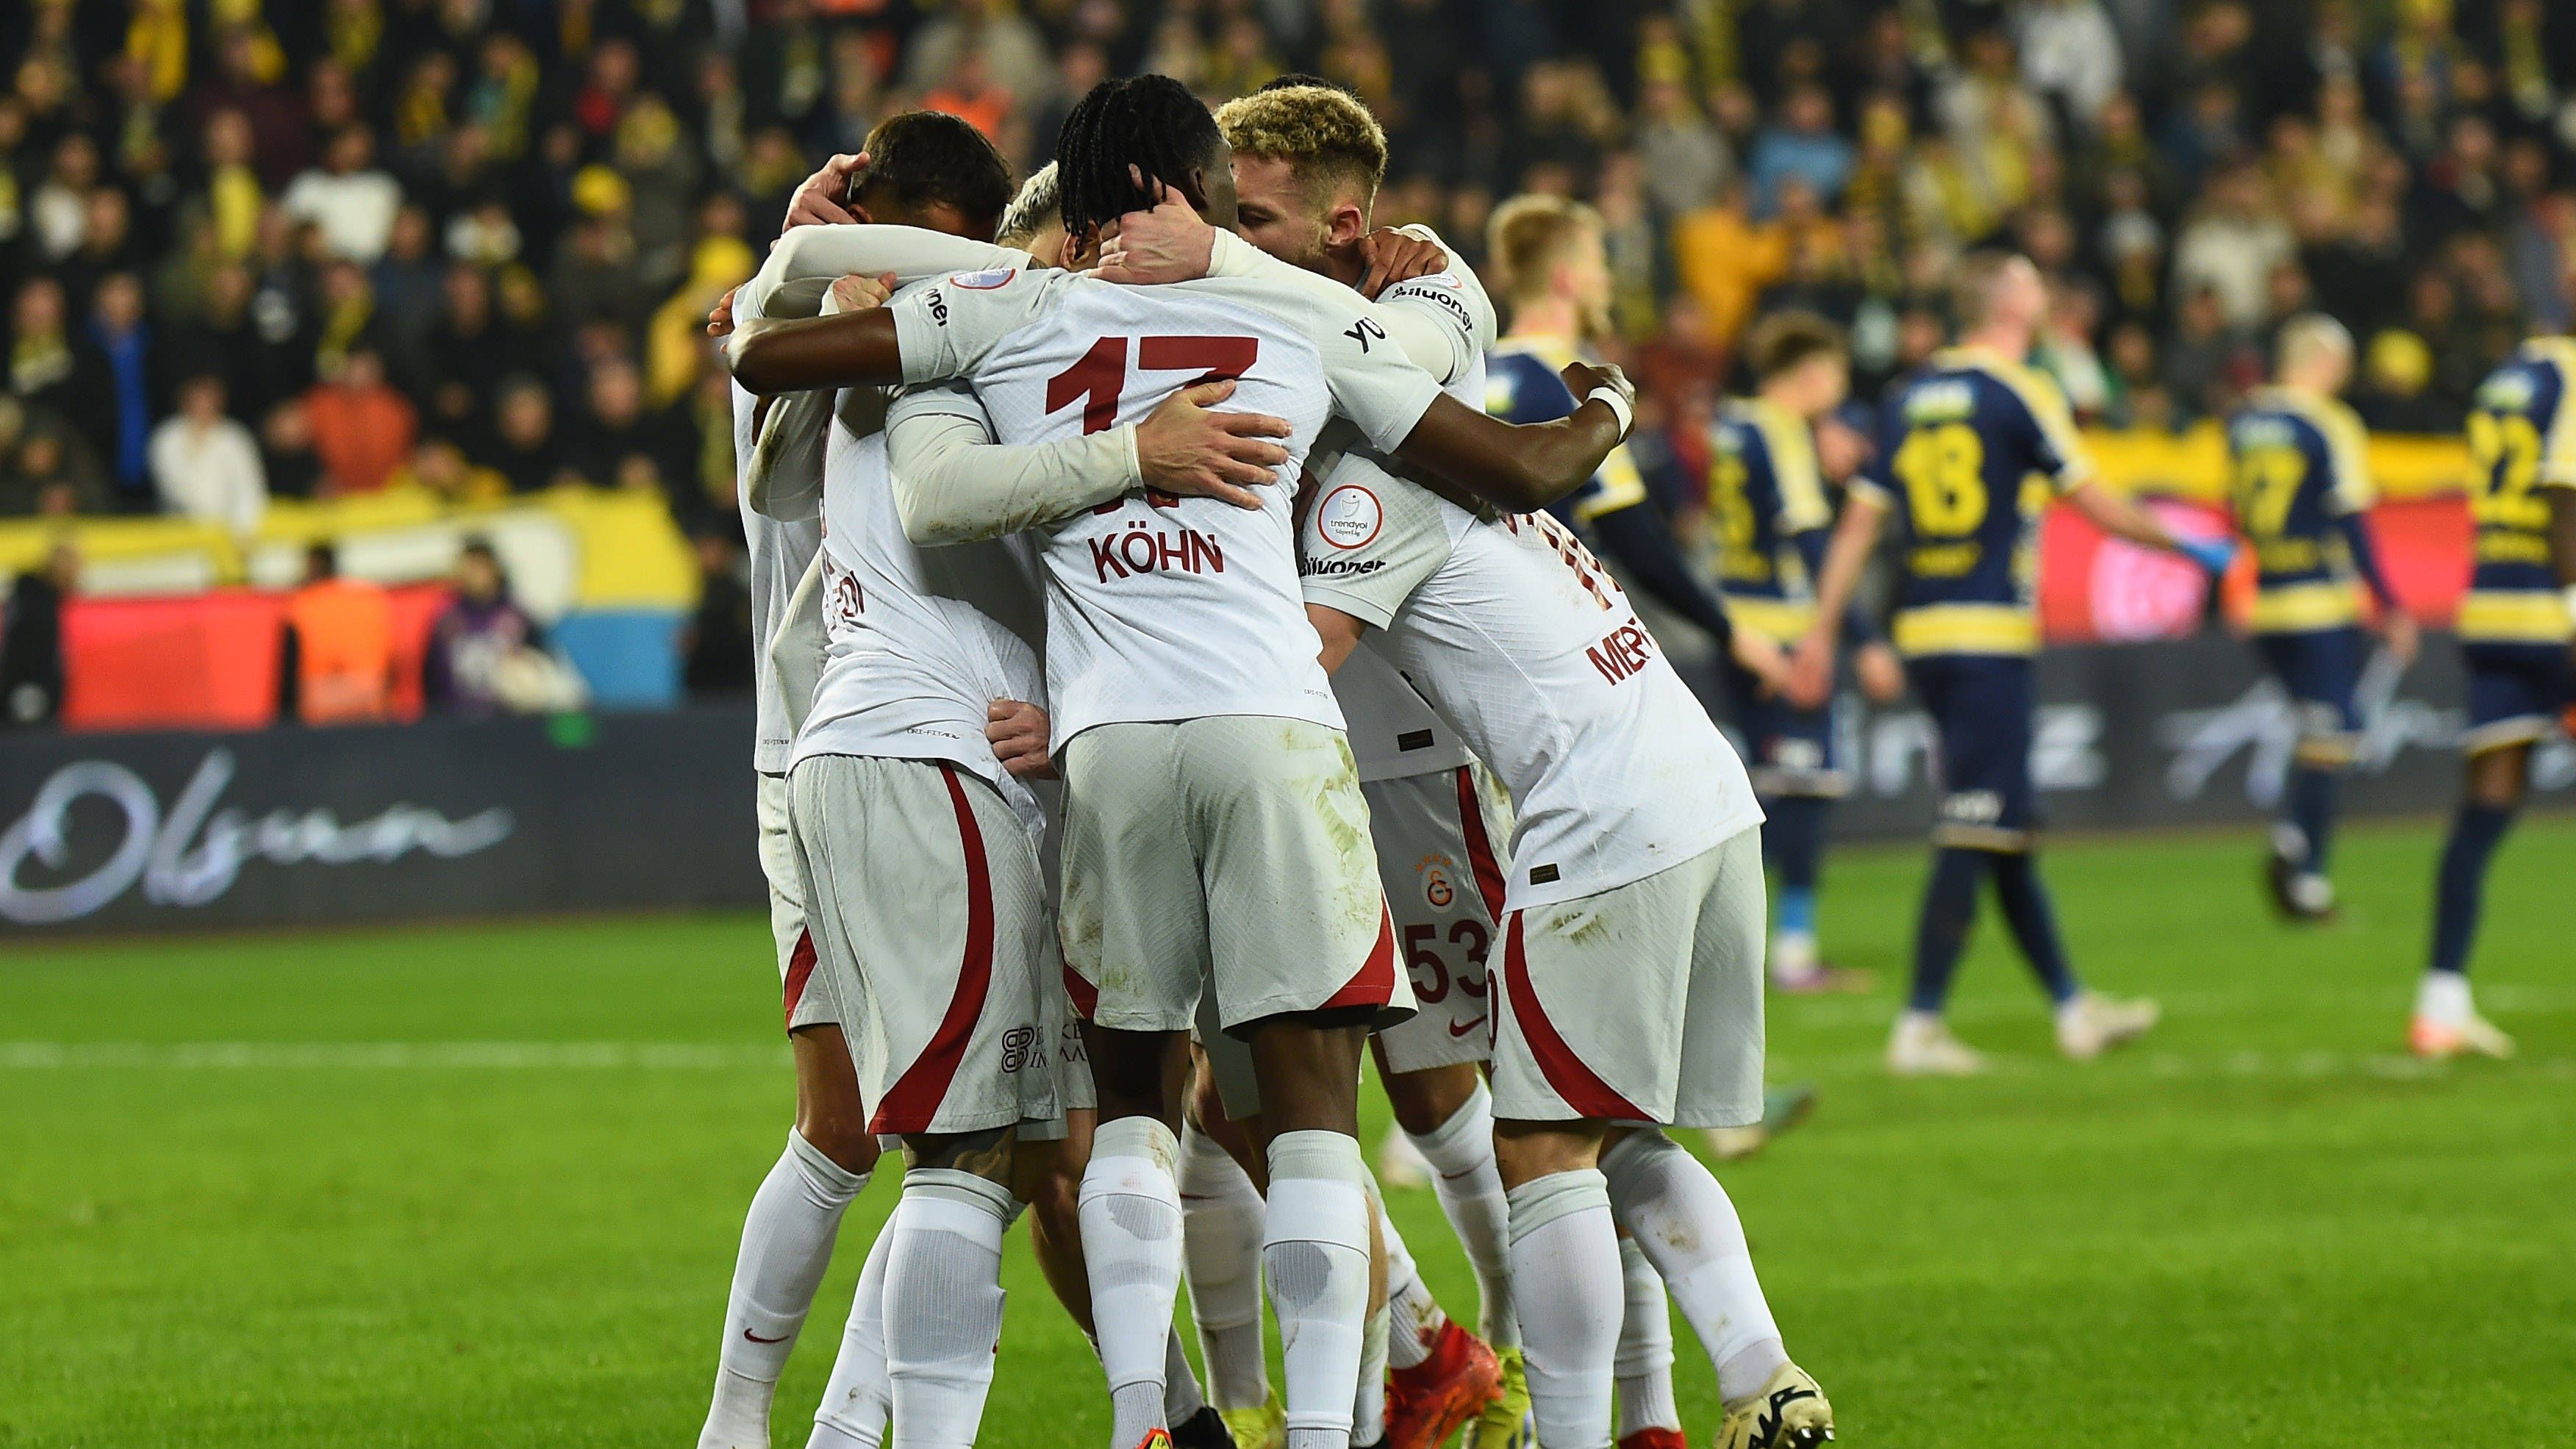 <strong>Platz 8: Türkei - Süper Lig</strong>&nbsp;<br>Aktuelle Punktzahl: 11.000<br>Noch im Europapokal vertreten: Galatasaray Istanbul (Bild, Europa League), Fenerbahce Istanbul (Europa Conference League)